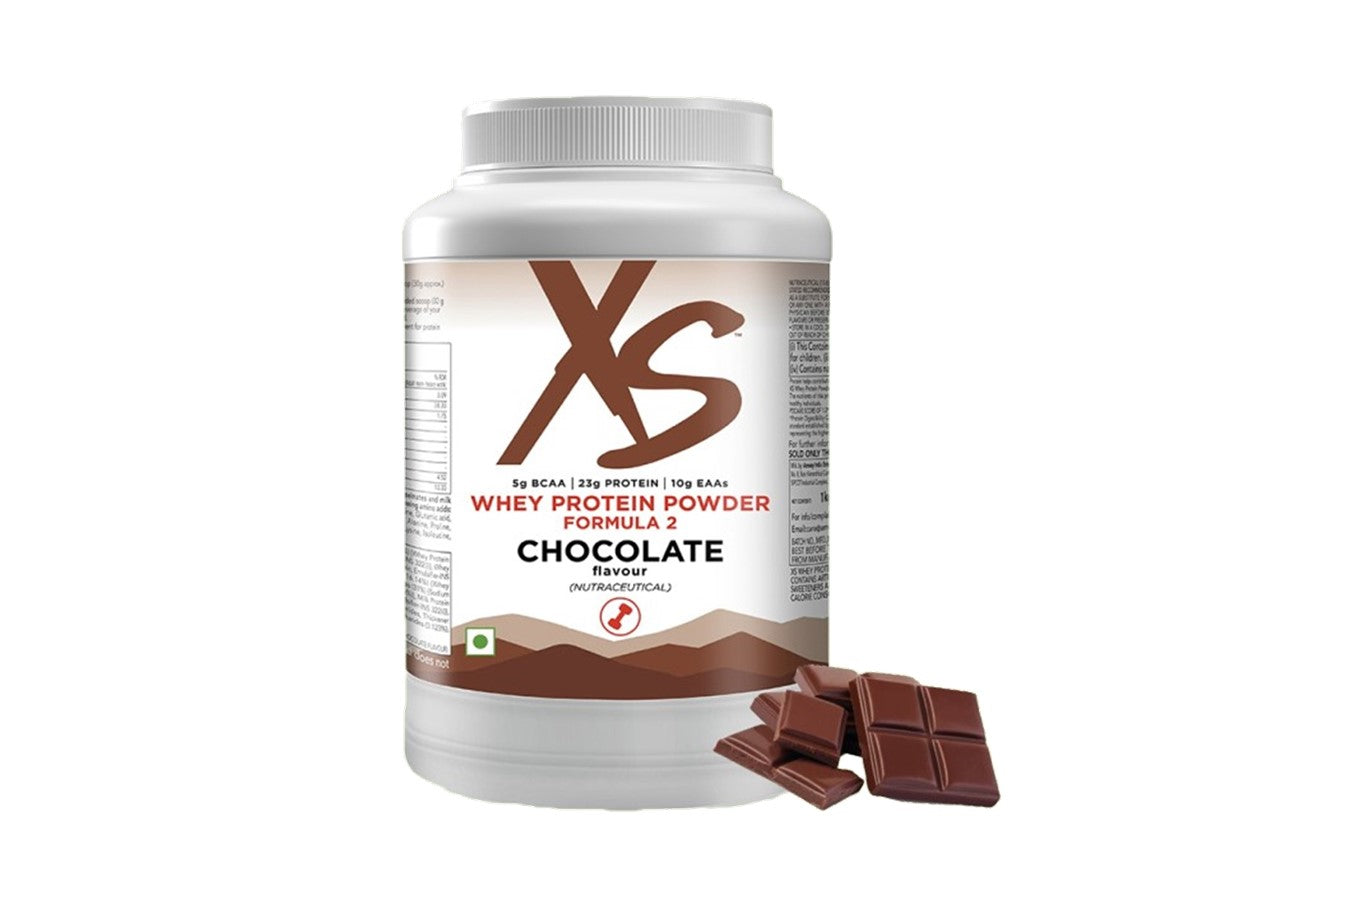 Nutrilite Whey Protein Powder Formula 2 Chocolate Flavour 1kg